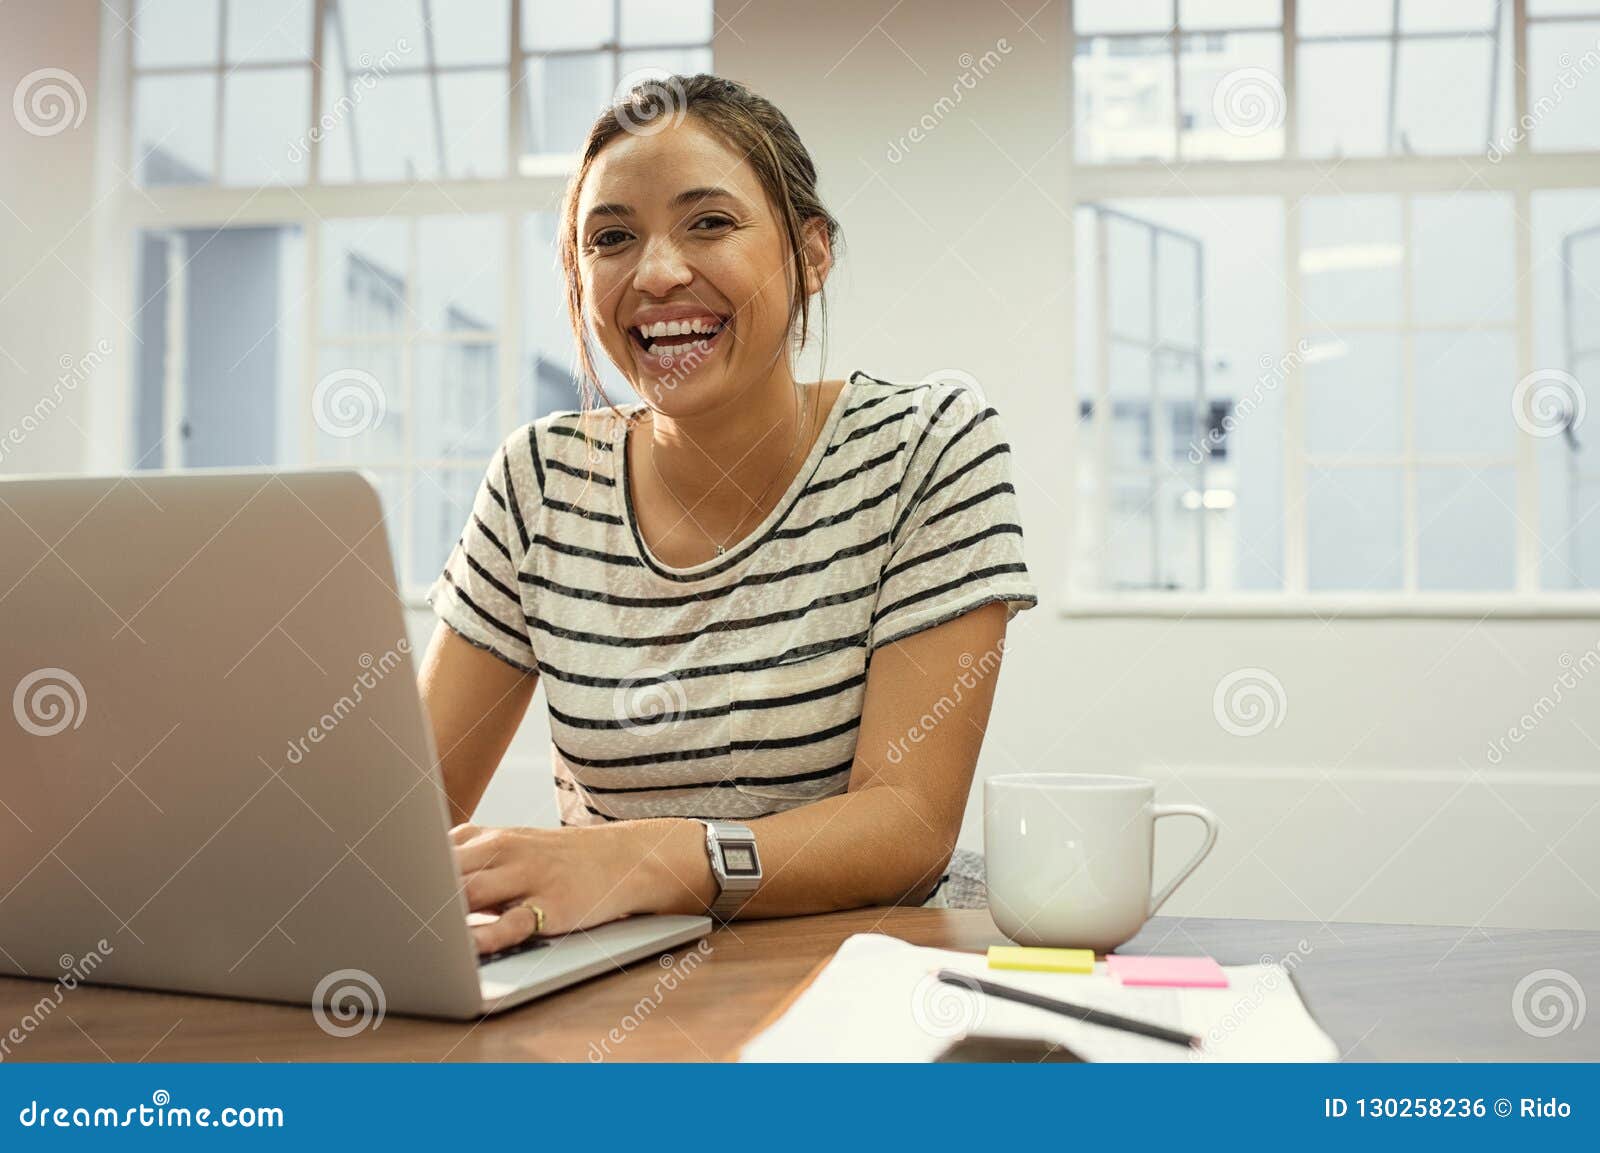 cheerful latin woman using laptop